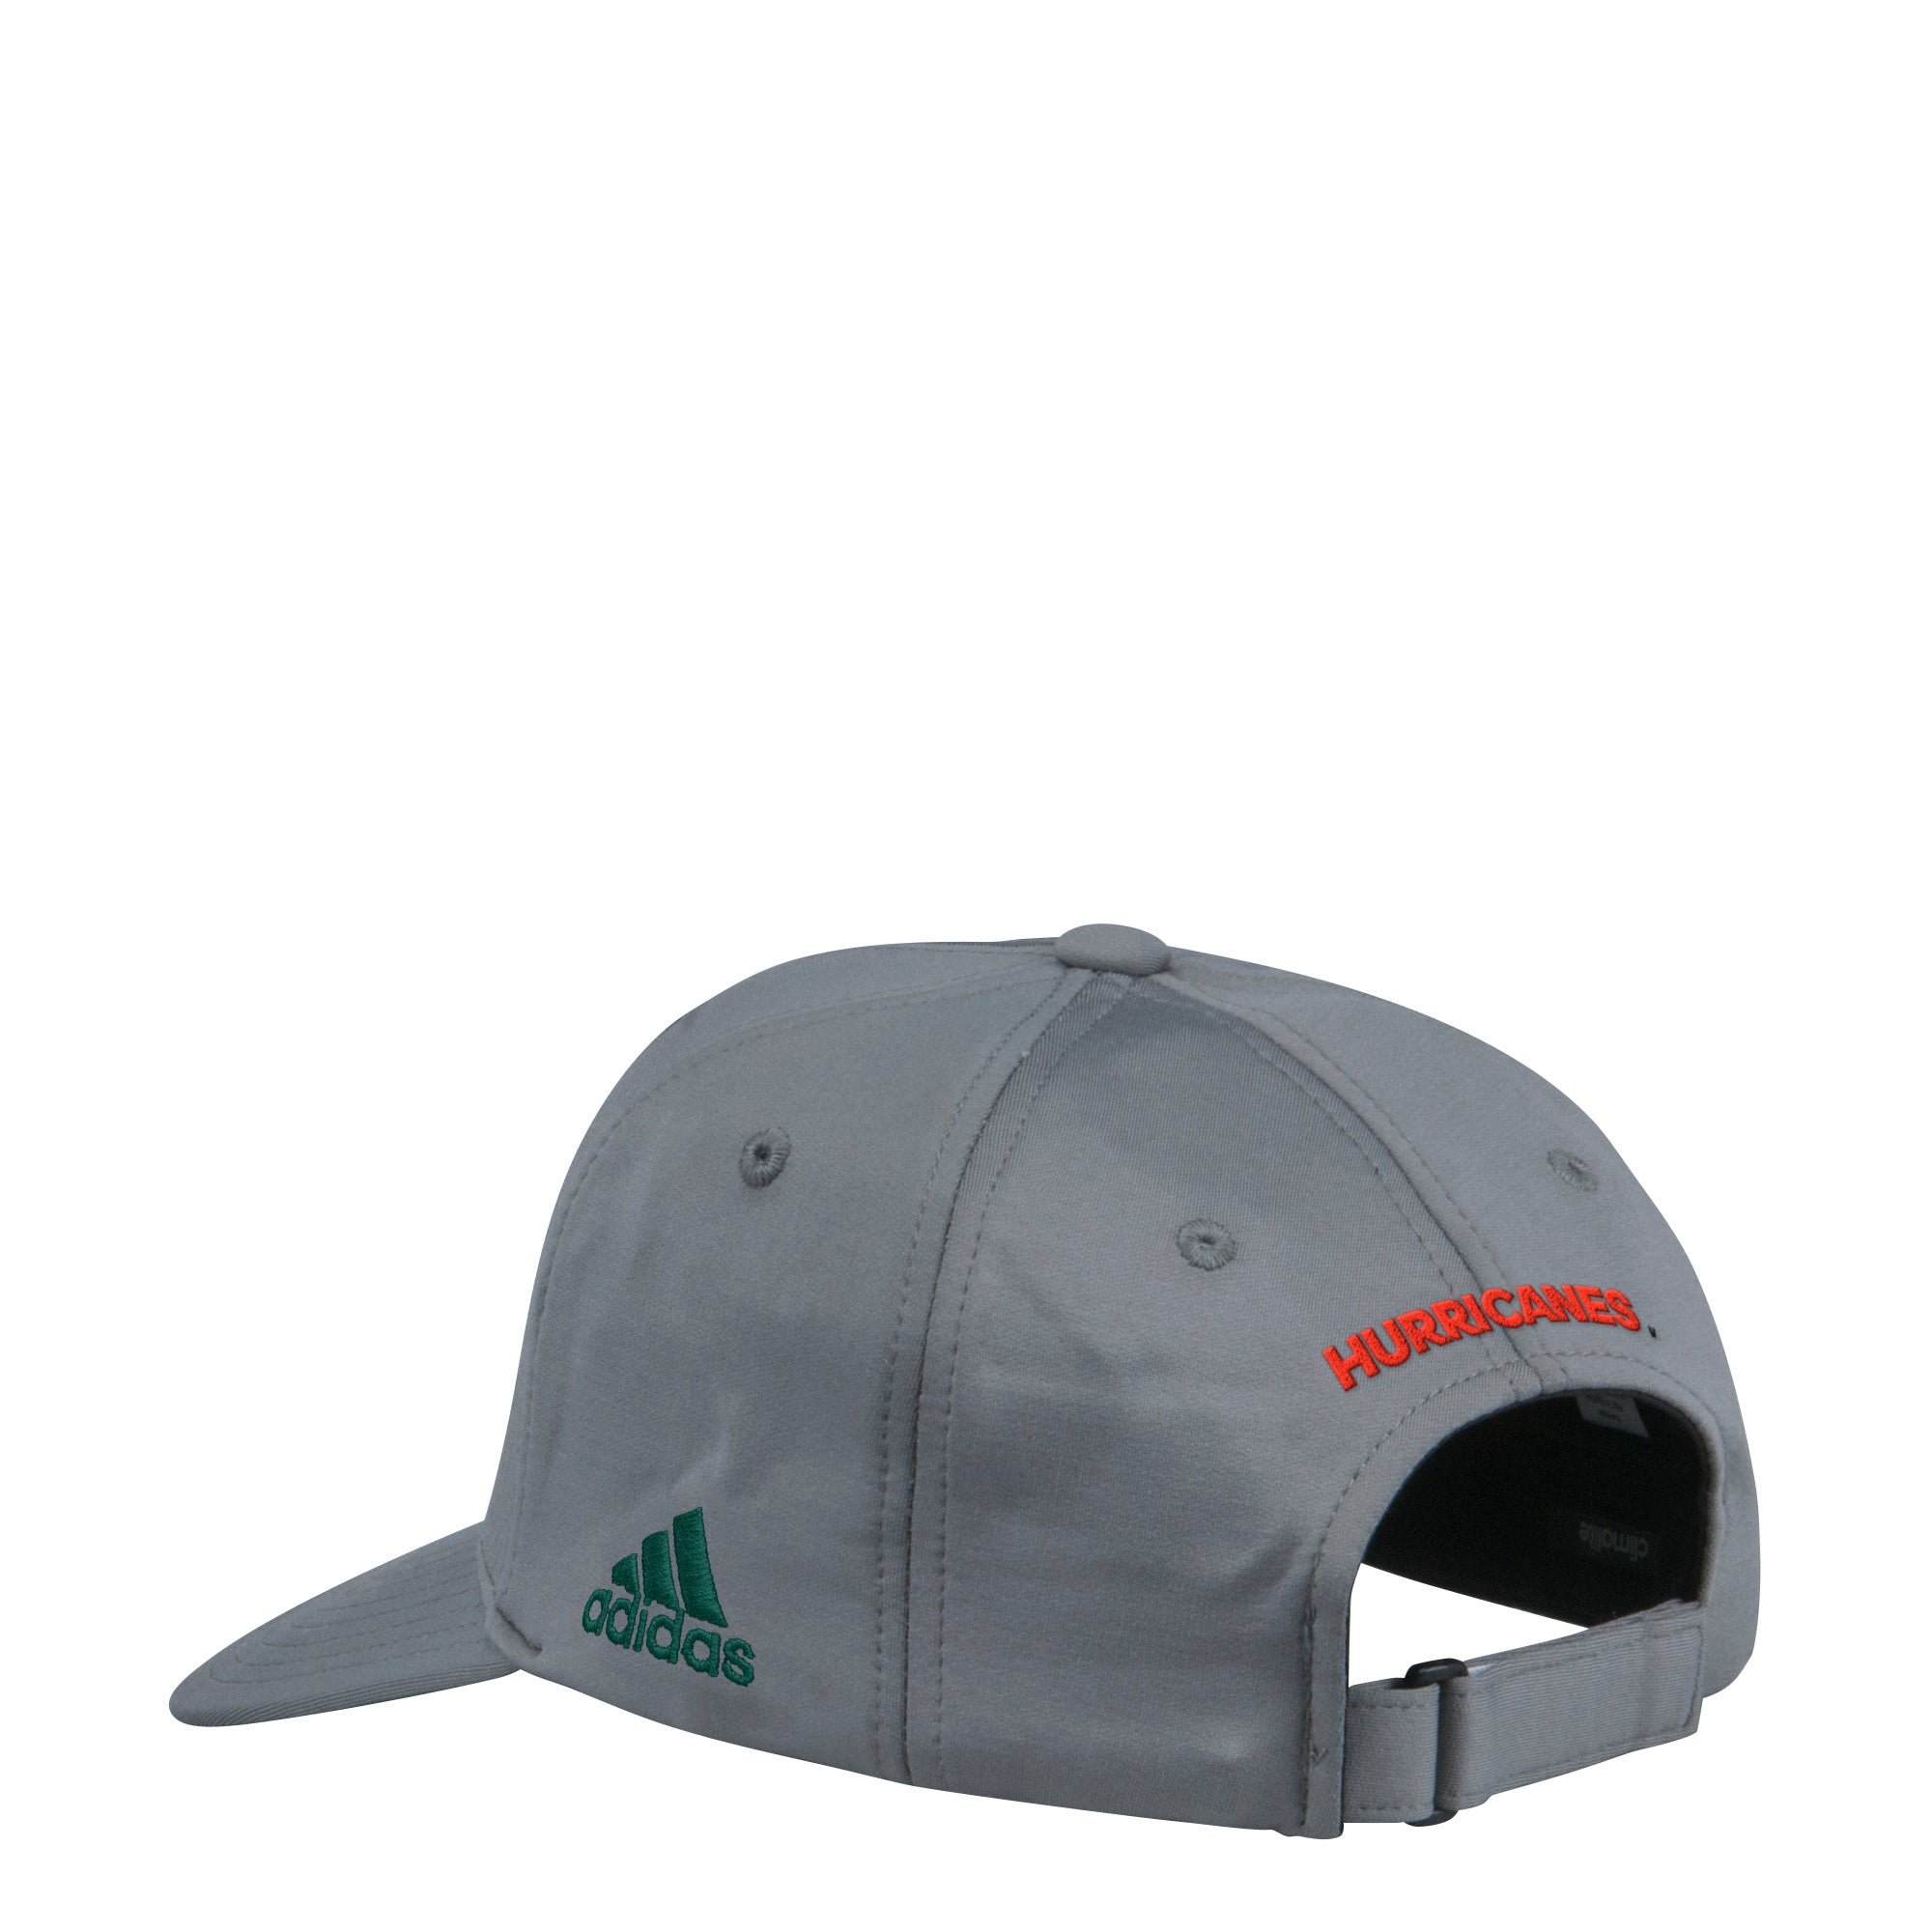 Miami Hurricanes adidas Spring Game Adjustable Structured Hat - Grey